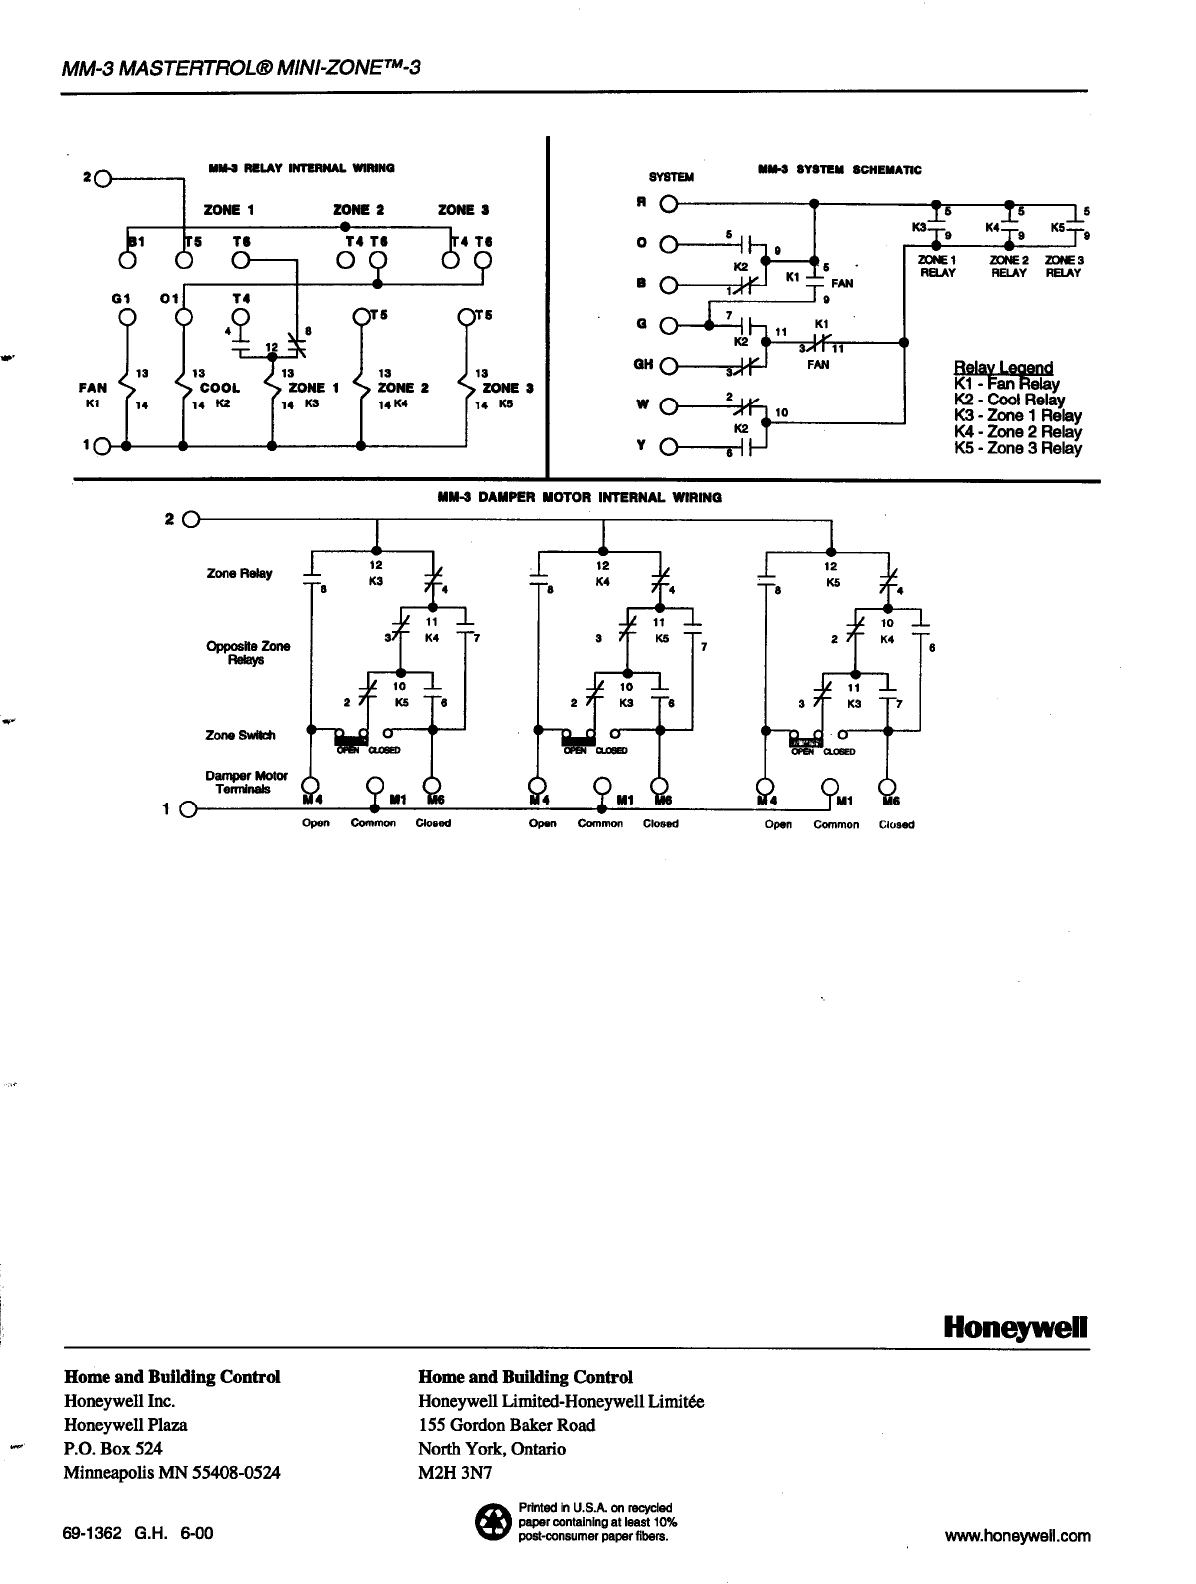 Honeywell Trol-A-Temp MM-3 Mastertrol mini-3 HVAC zone controler 